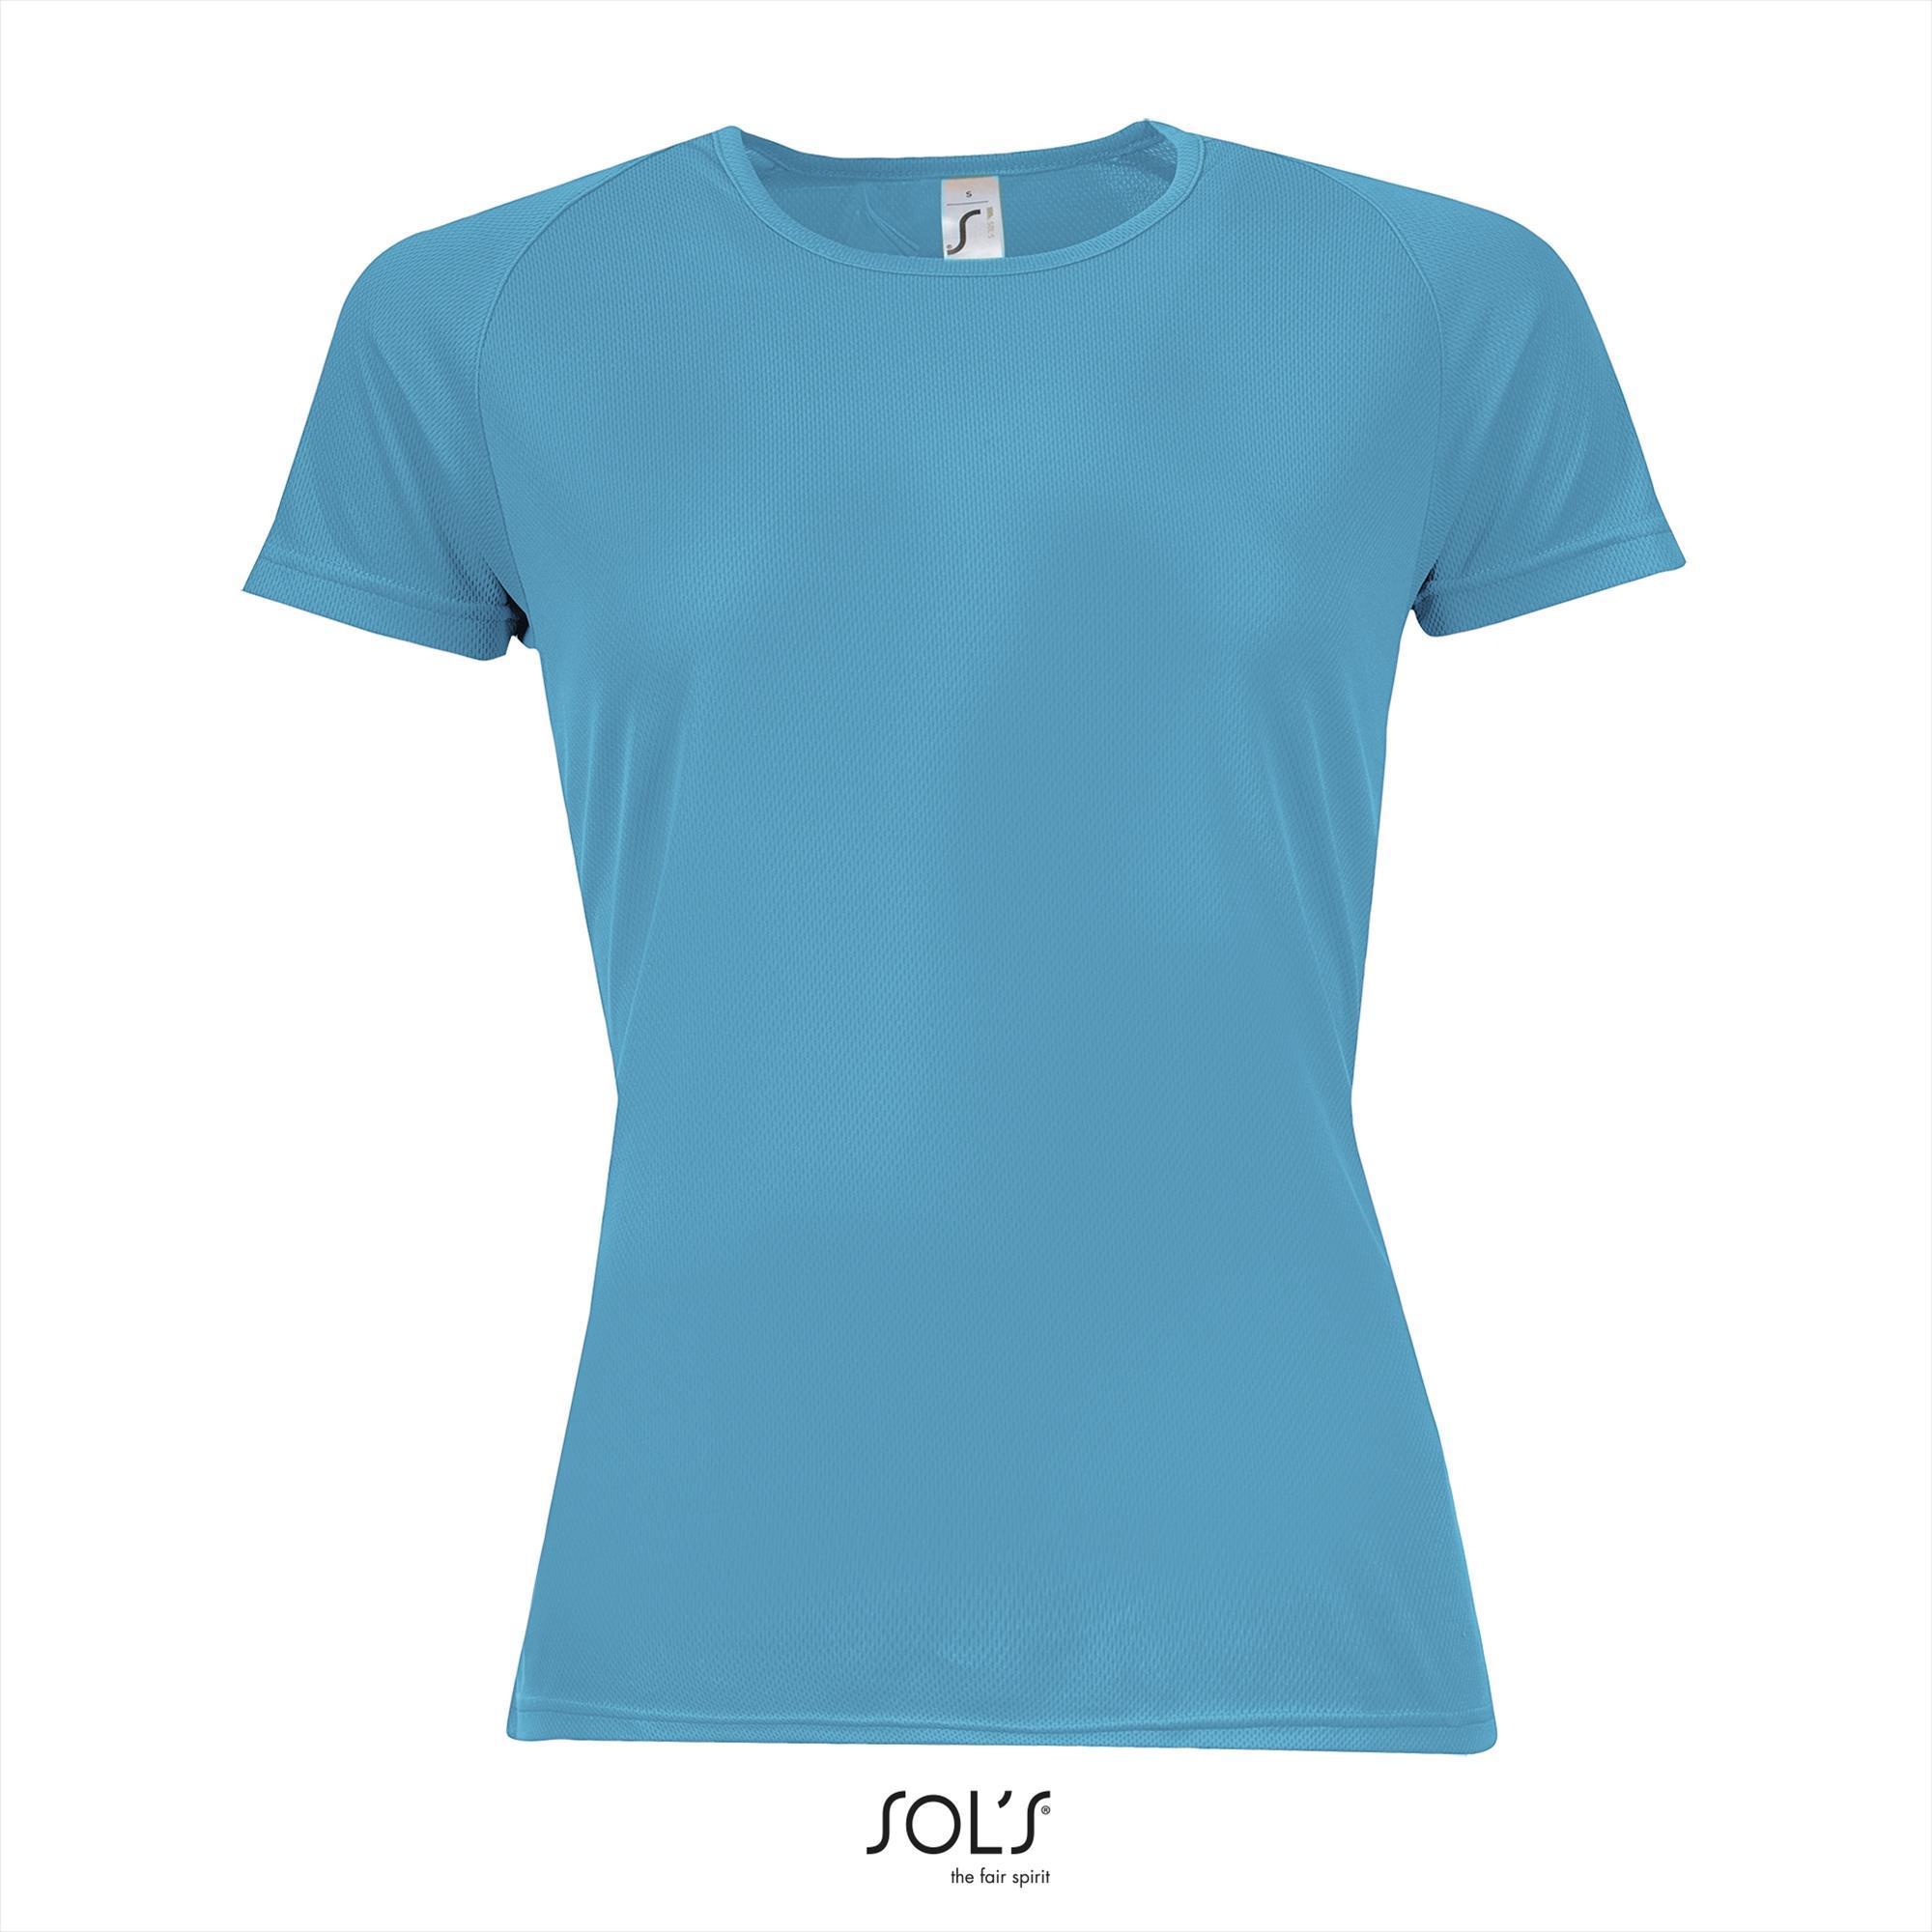 Dames sportshirt aqua blauw met ademend effect en langer rugpand Dri-FIT.